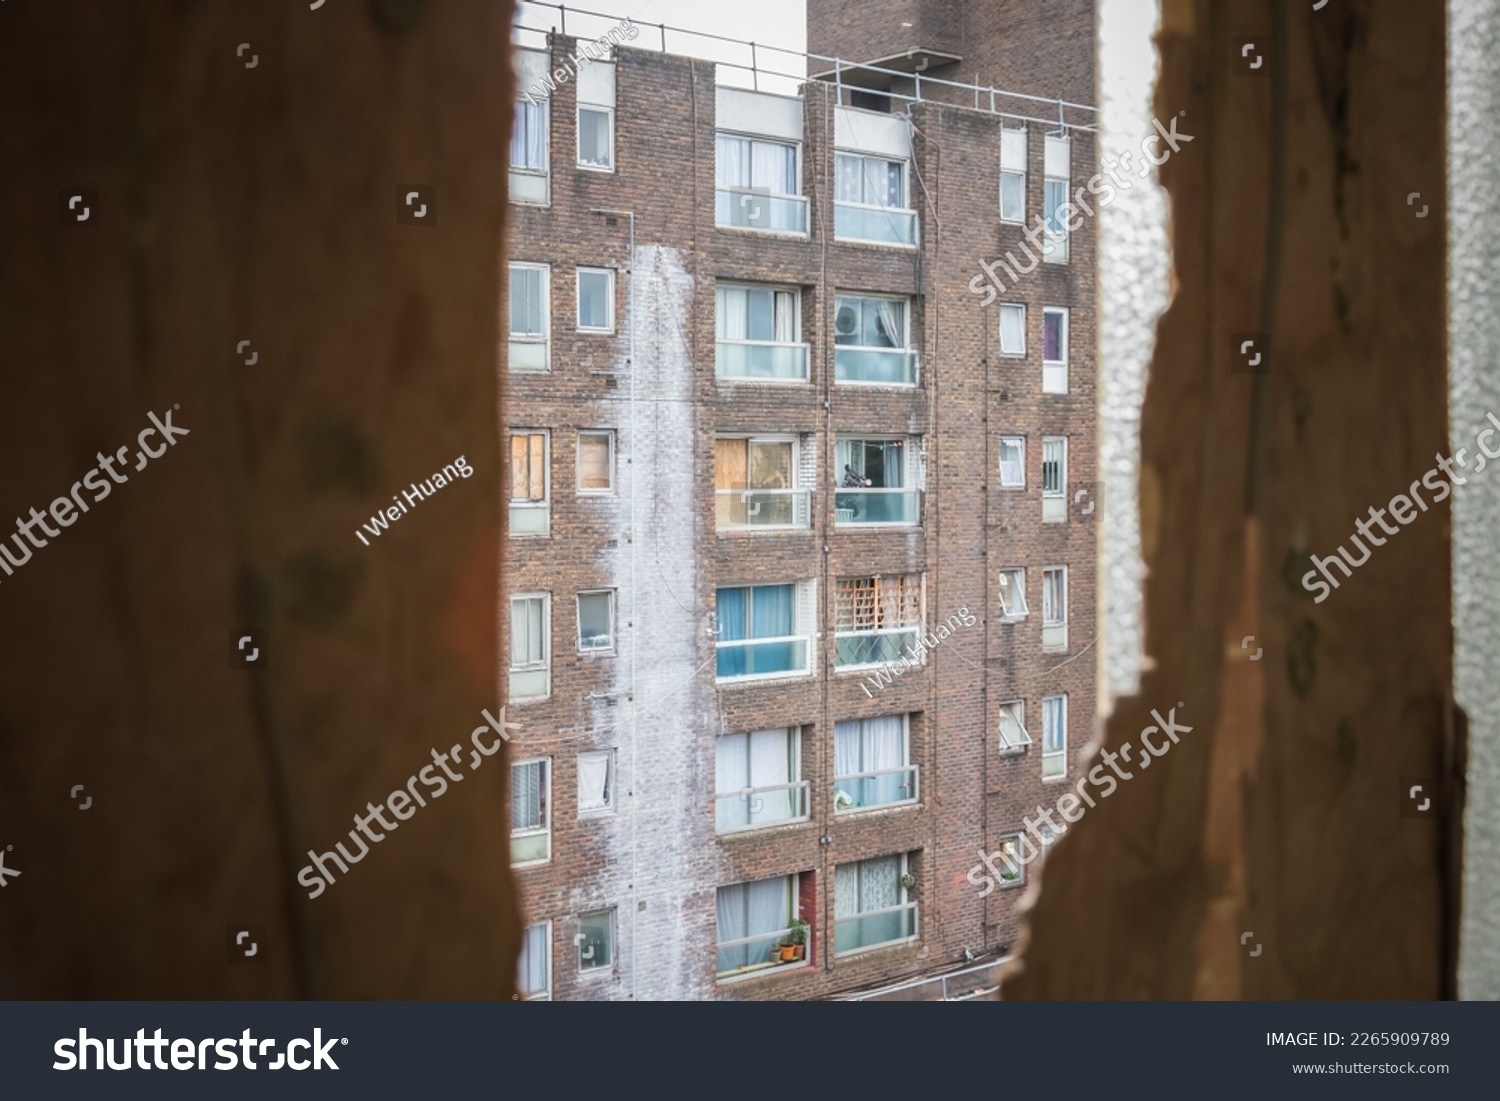 An old council block seen through a broken window in Grahame Park housing estate in London #2265909789